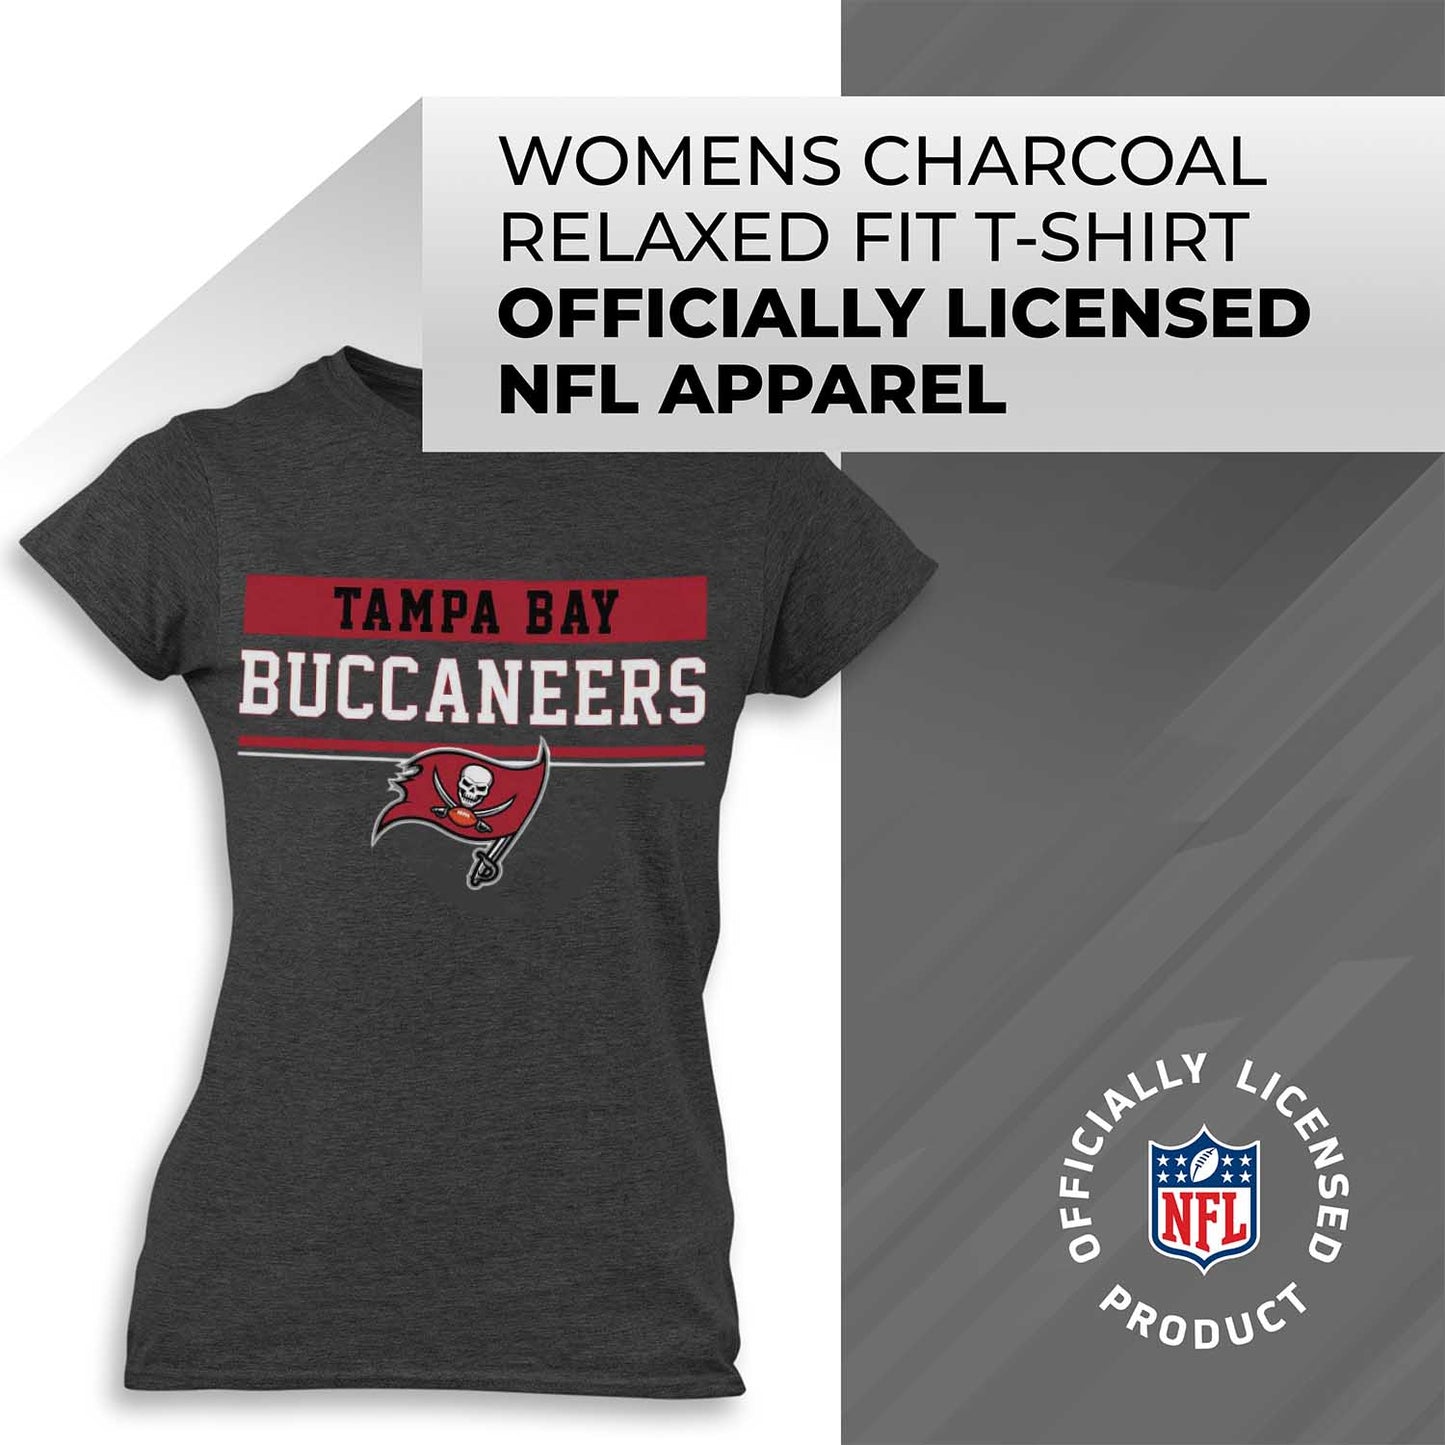 Tampa Bay Buccaneers NFL Women's Team Block Charcoal Tagless T-Shirt - Charcoal